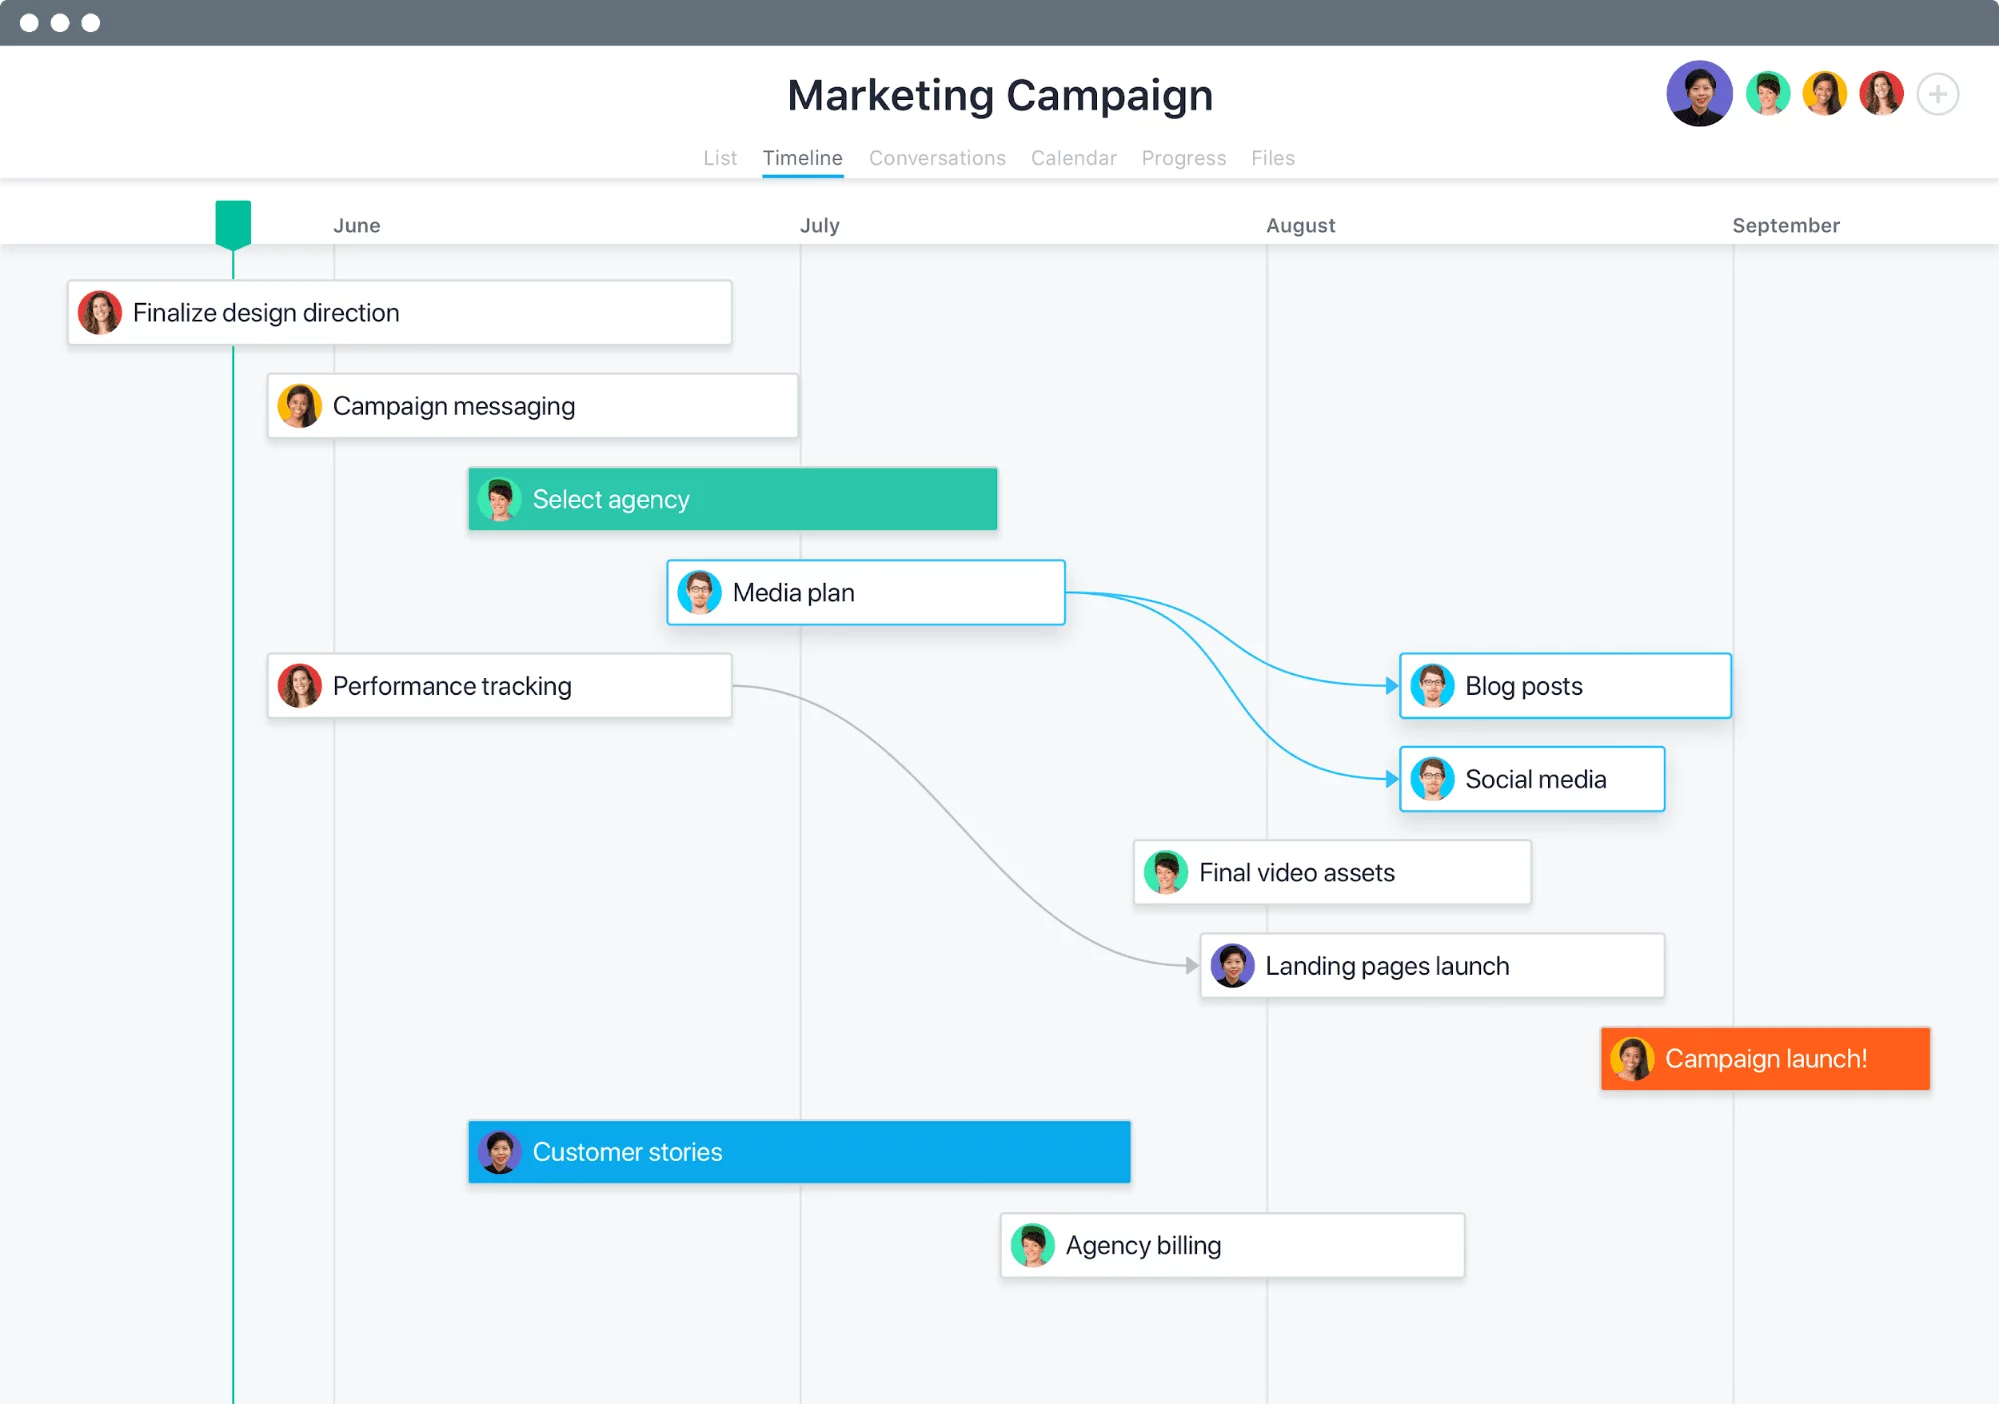 Asana screenshot showing a gantt chart with marketing campaign tasks and dependencies.